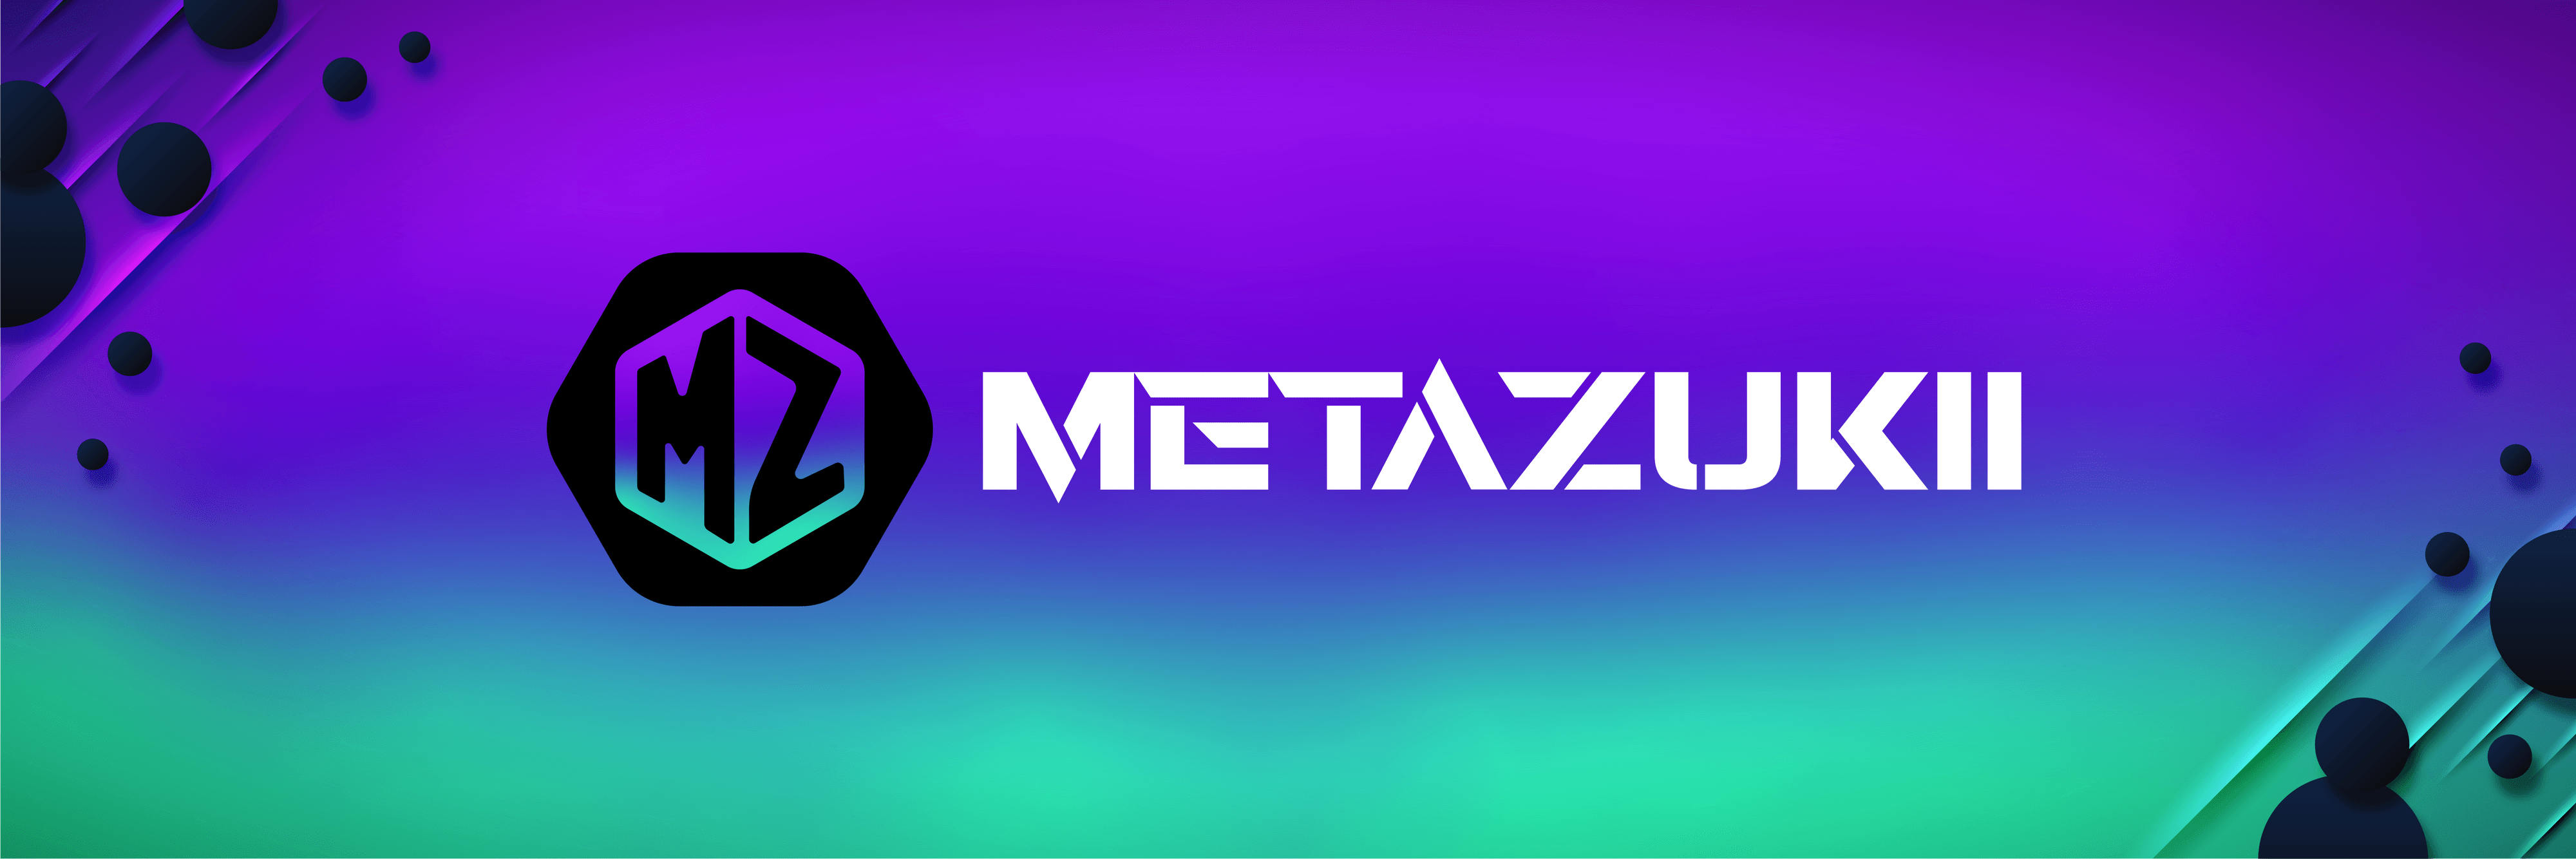 Meta-Zukii bannière